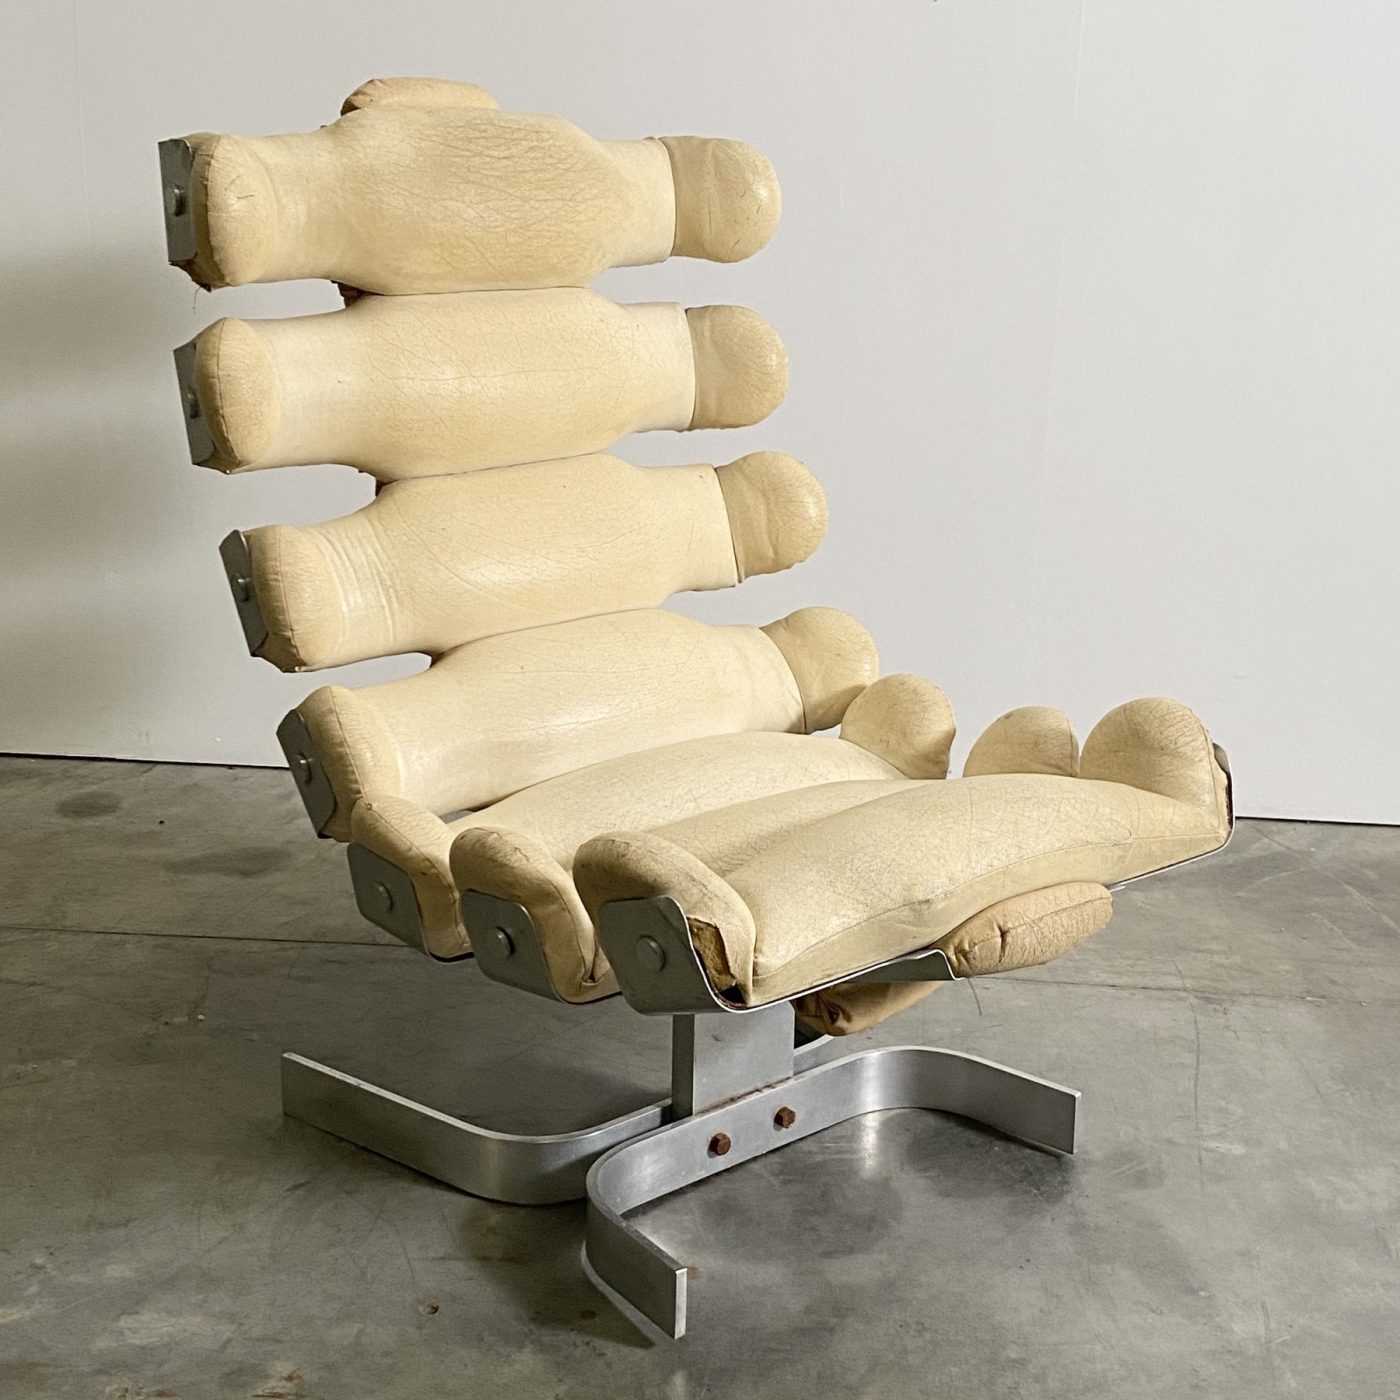 objet-vagabond-midcentury-chair0004